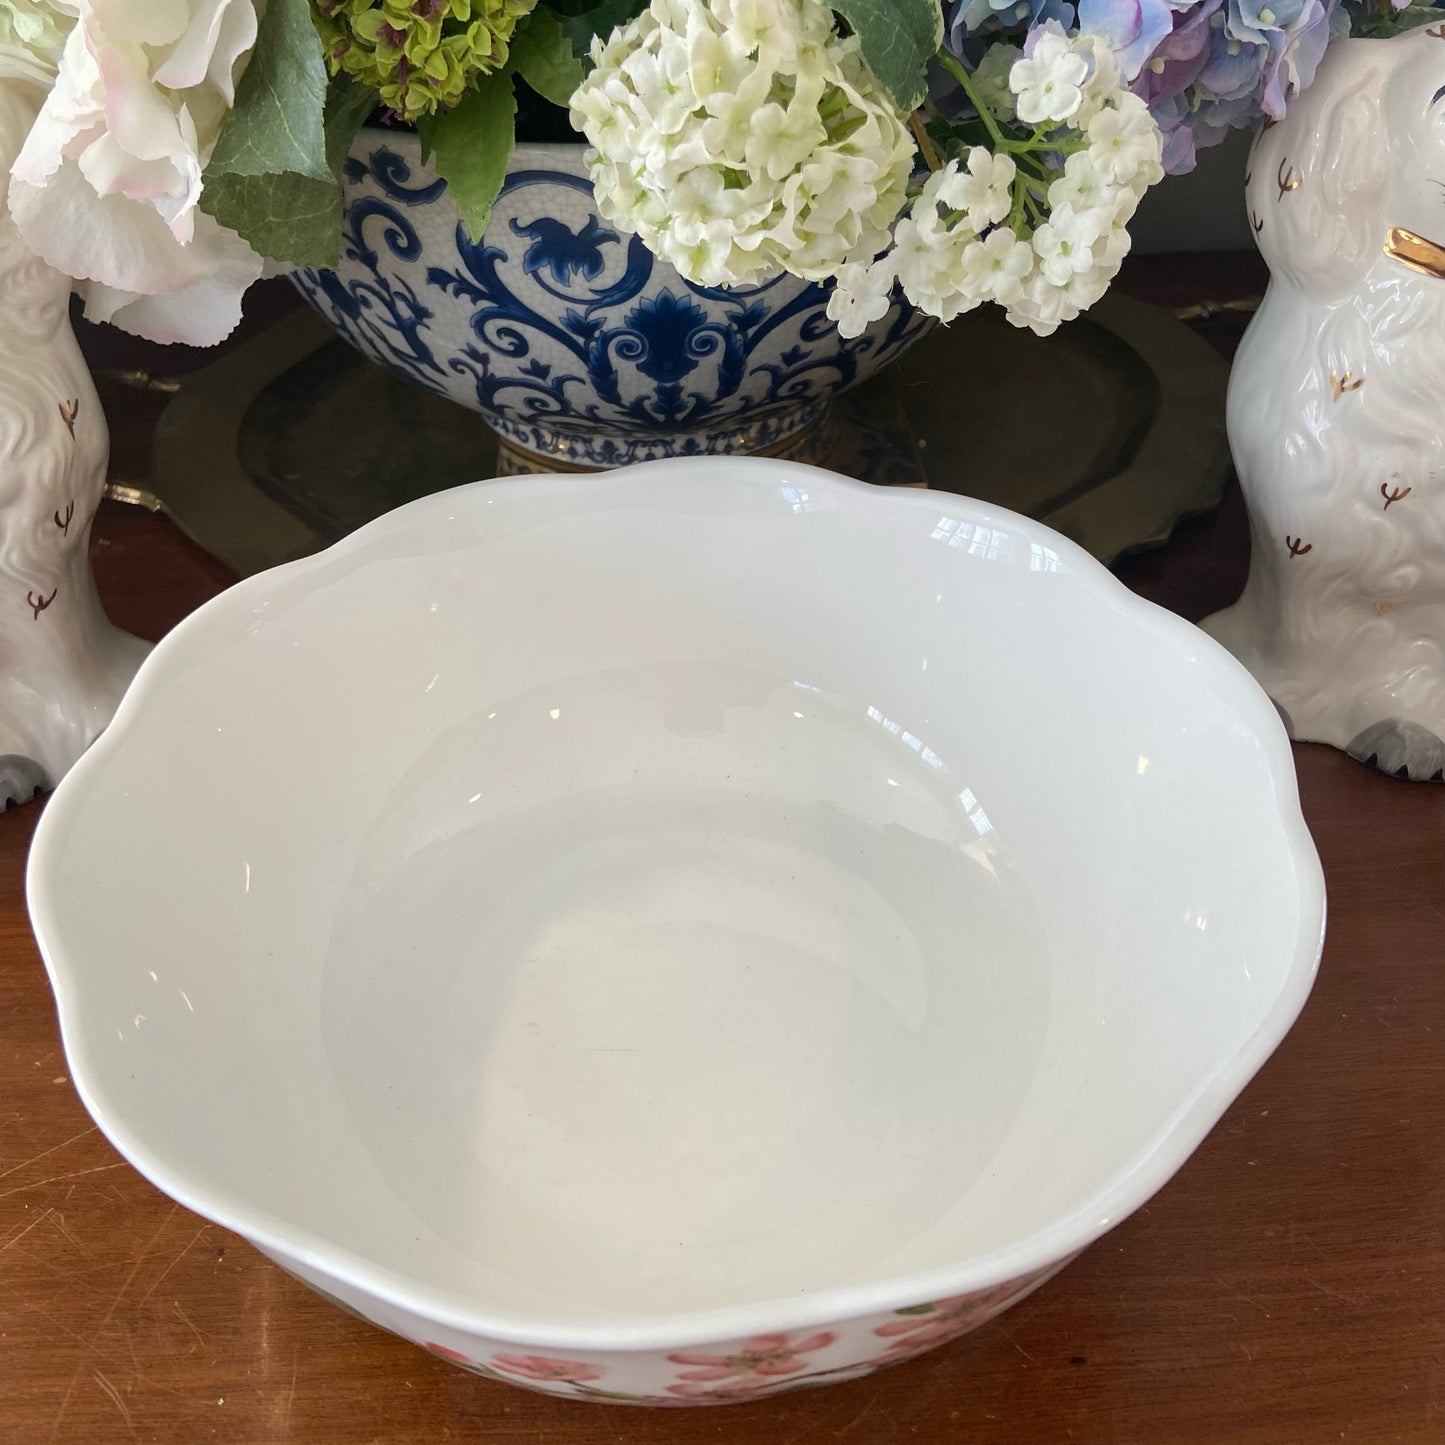 Vintage Lenox “Orchids in Bloom” scalloped edge large porcelain bowl.